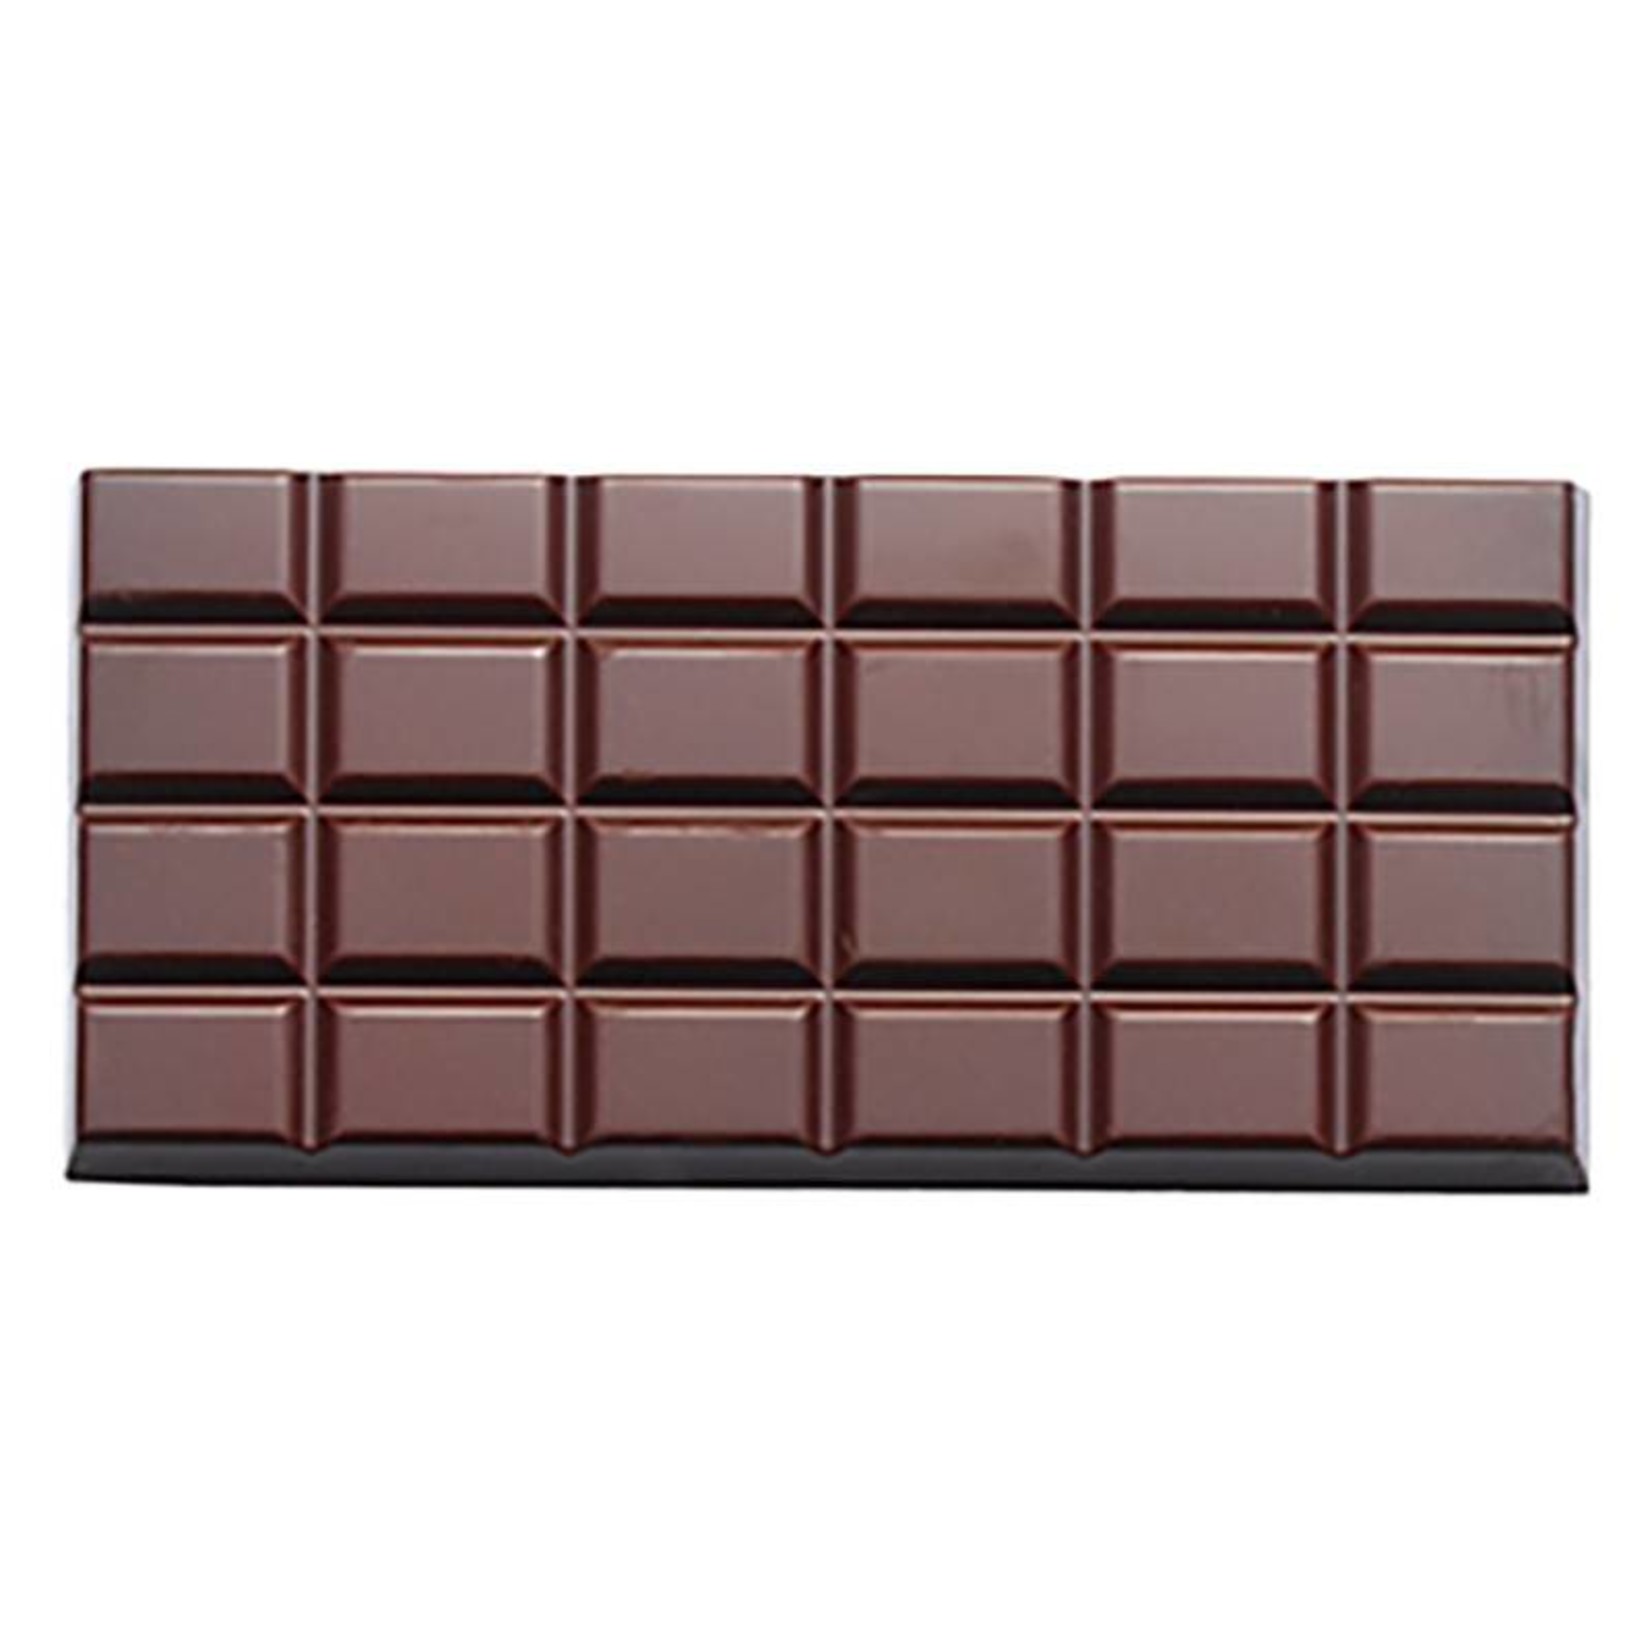 Cacao Barry Cacao Barry - Bar 100 g Tritan Chocolate Mold (3 cavity)